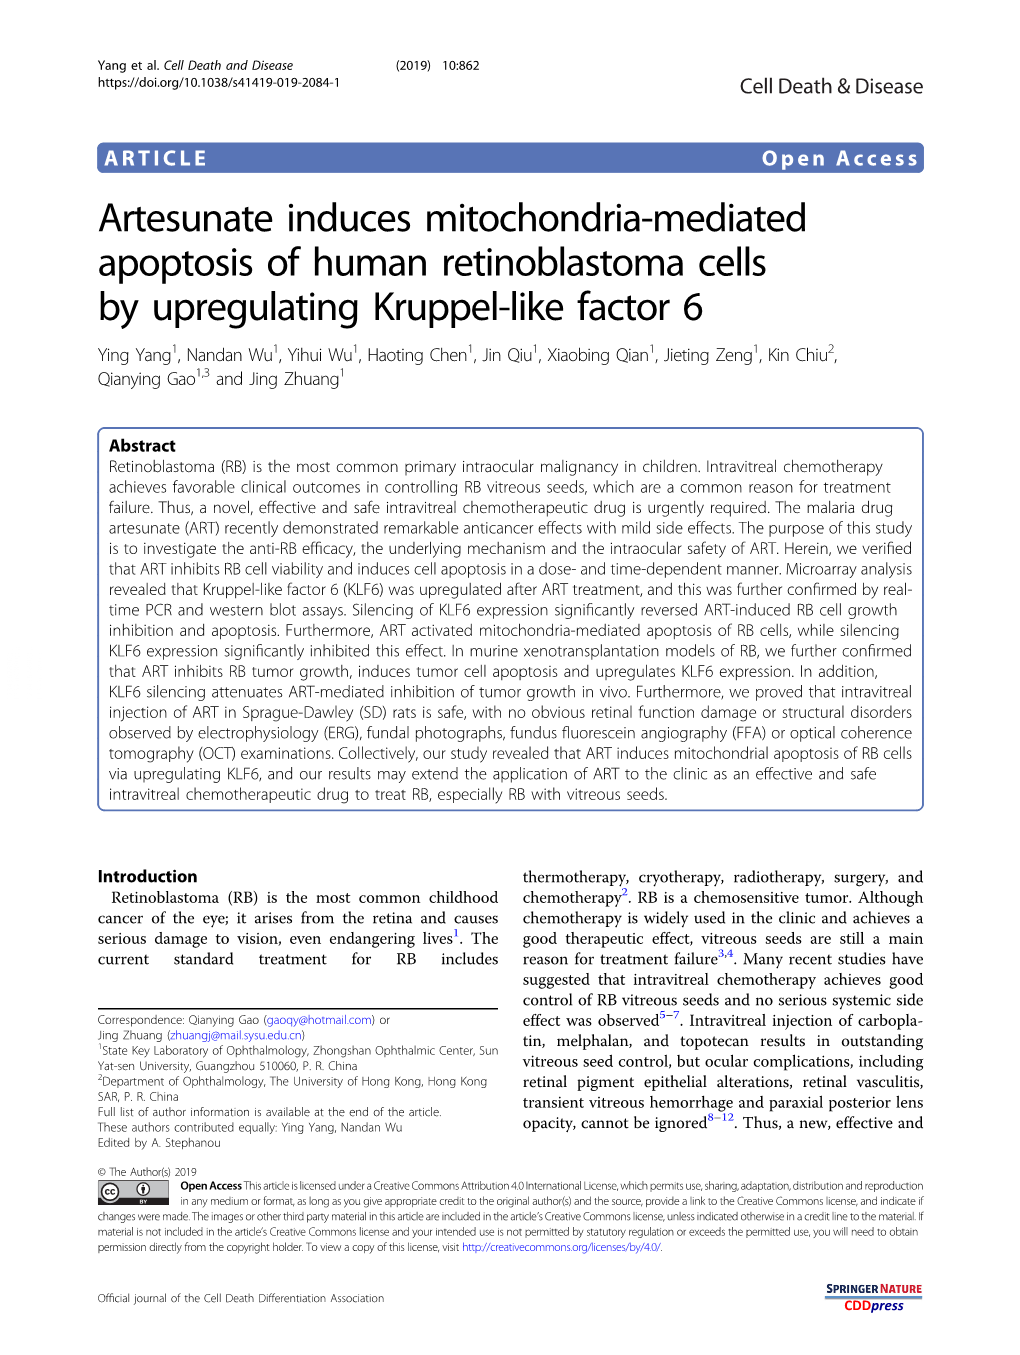 Artesunate Induces Mitochondria-Mediated Apoptosis Of